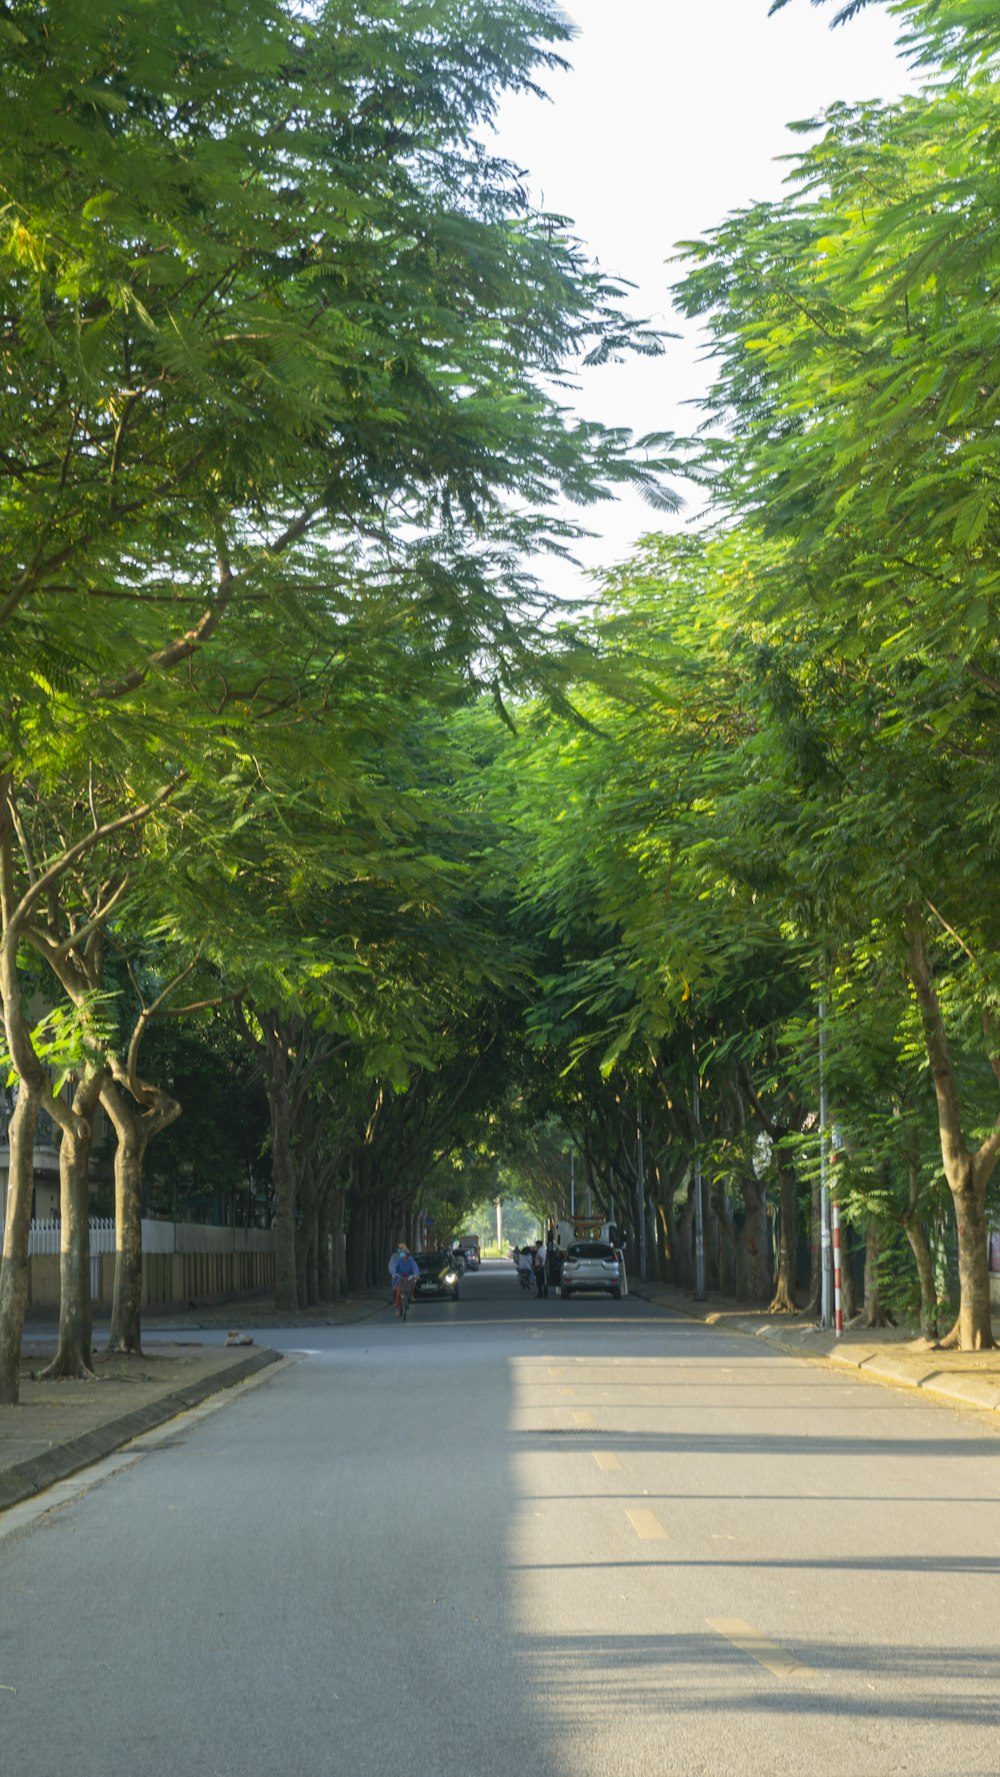 Une rue bordée de nombreux arbres verts